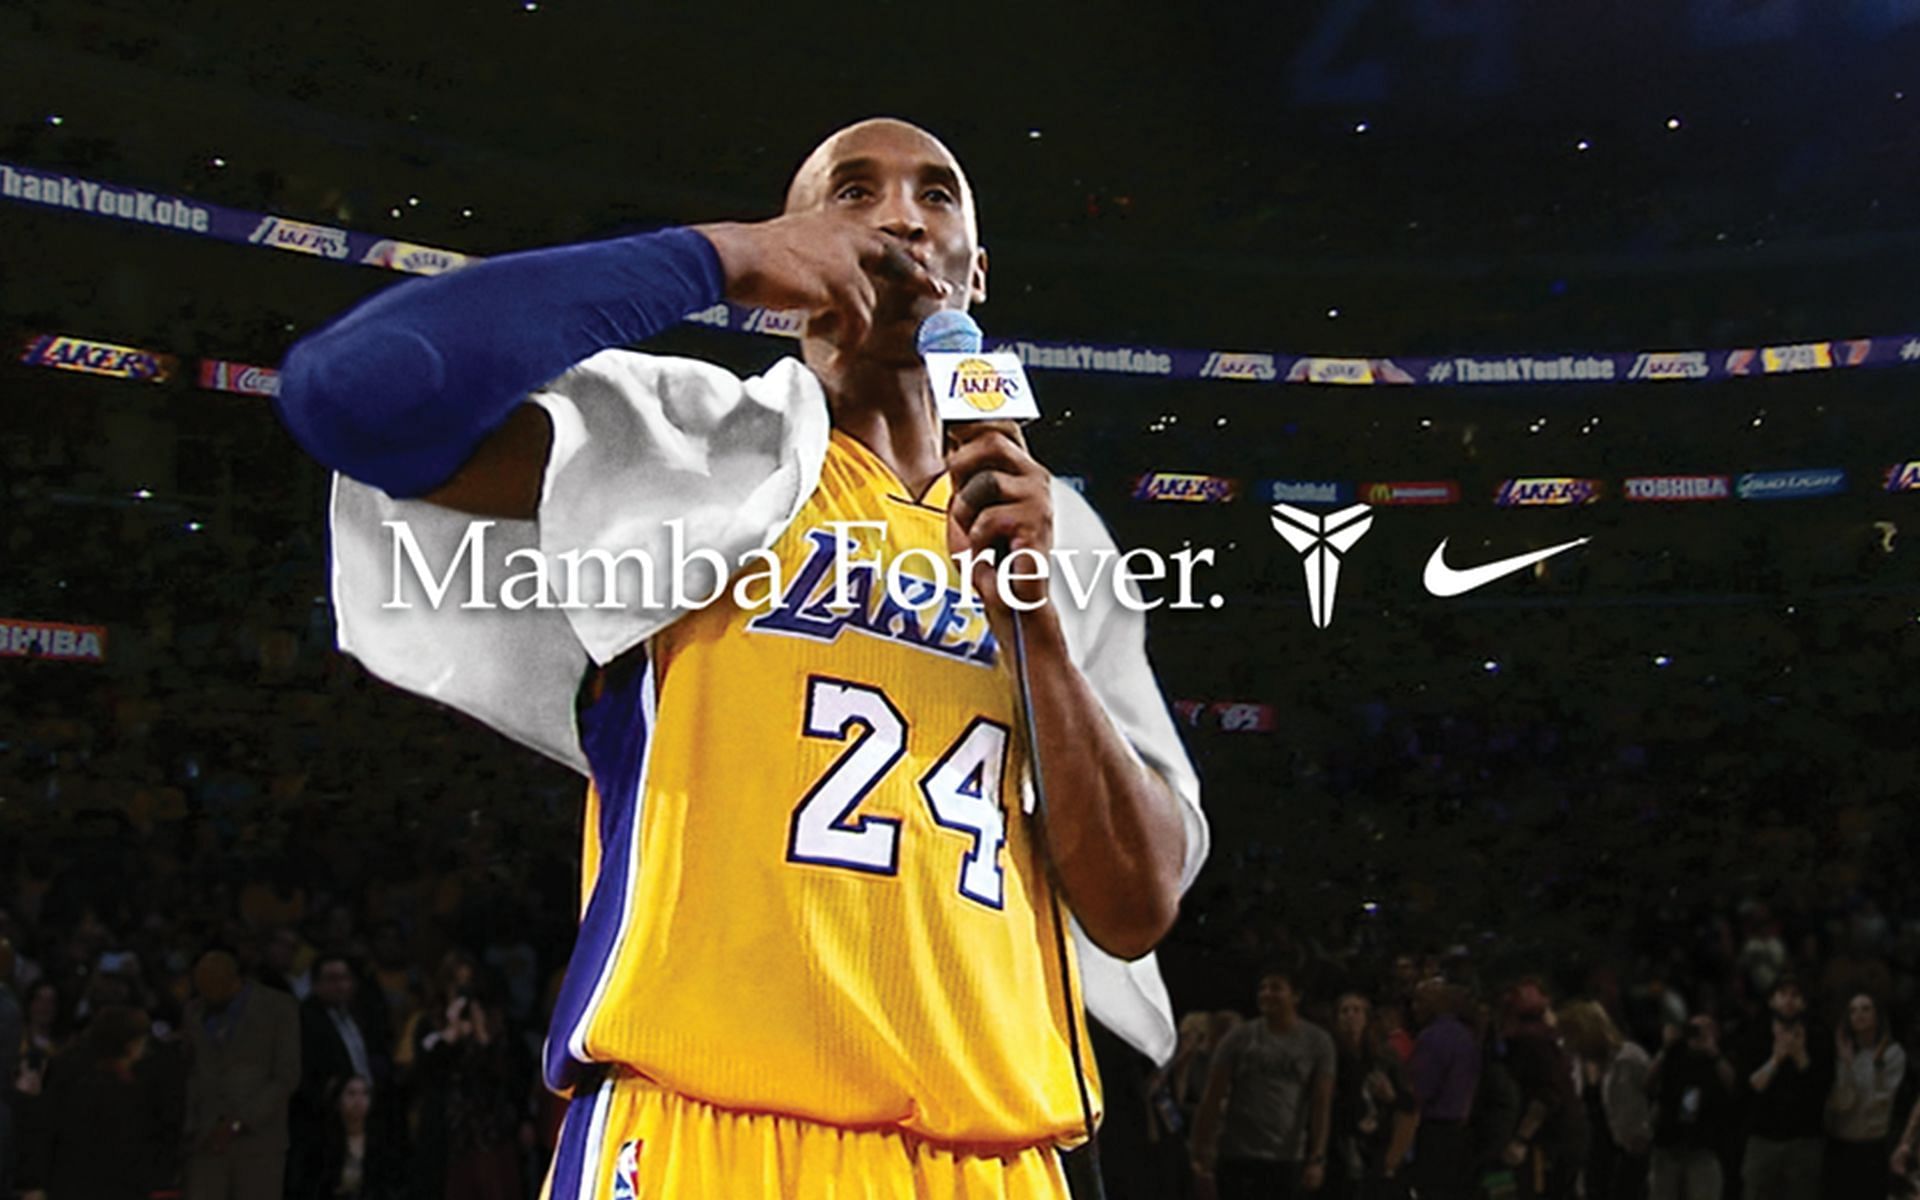 Nike x Kobe Bryant announcement (Image via news.nike.com)